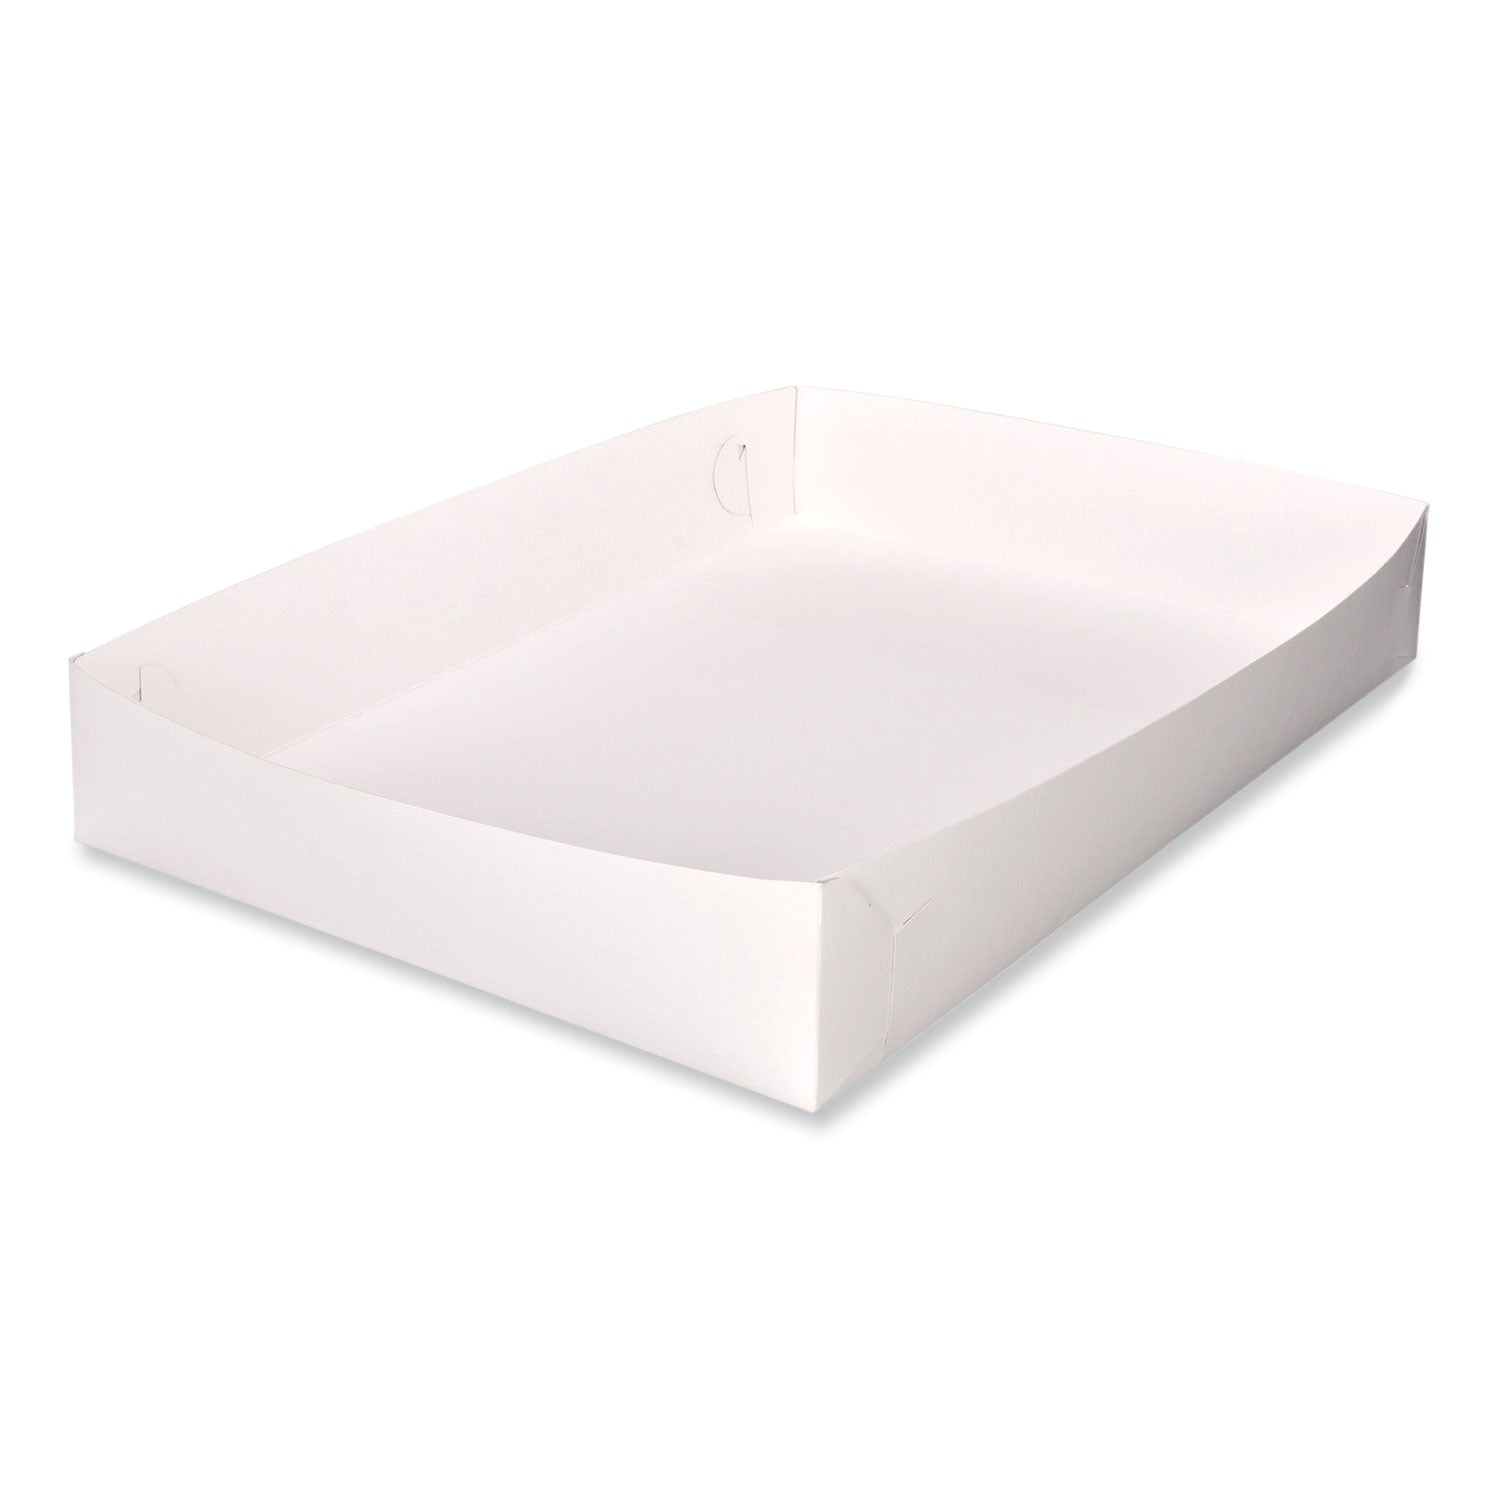 bakery-boxes-standard-26-x-185-x-4-white-paper-50-carton_sch1995 - 3